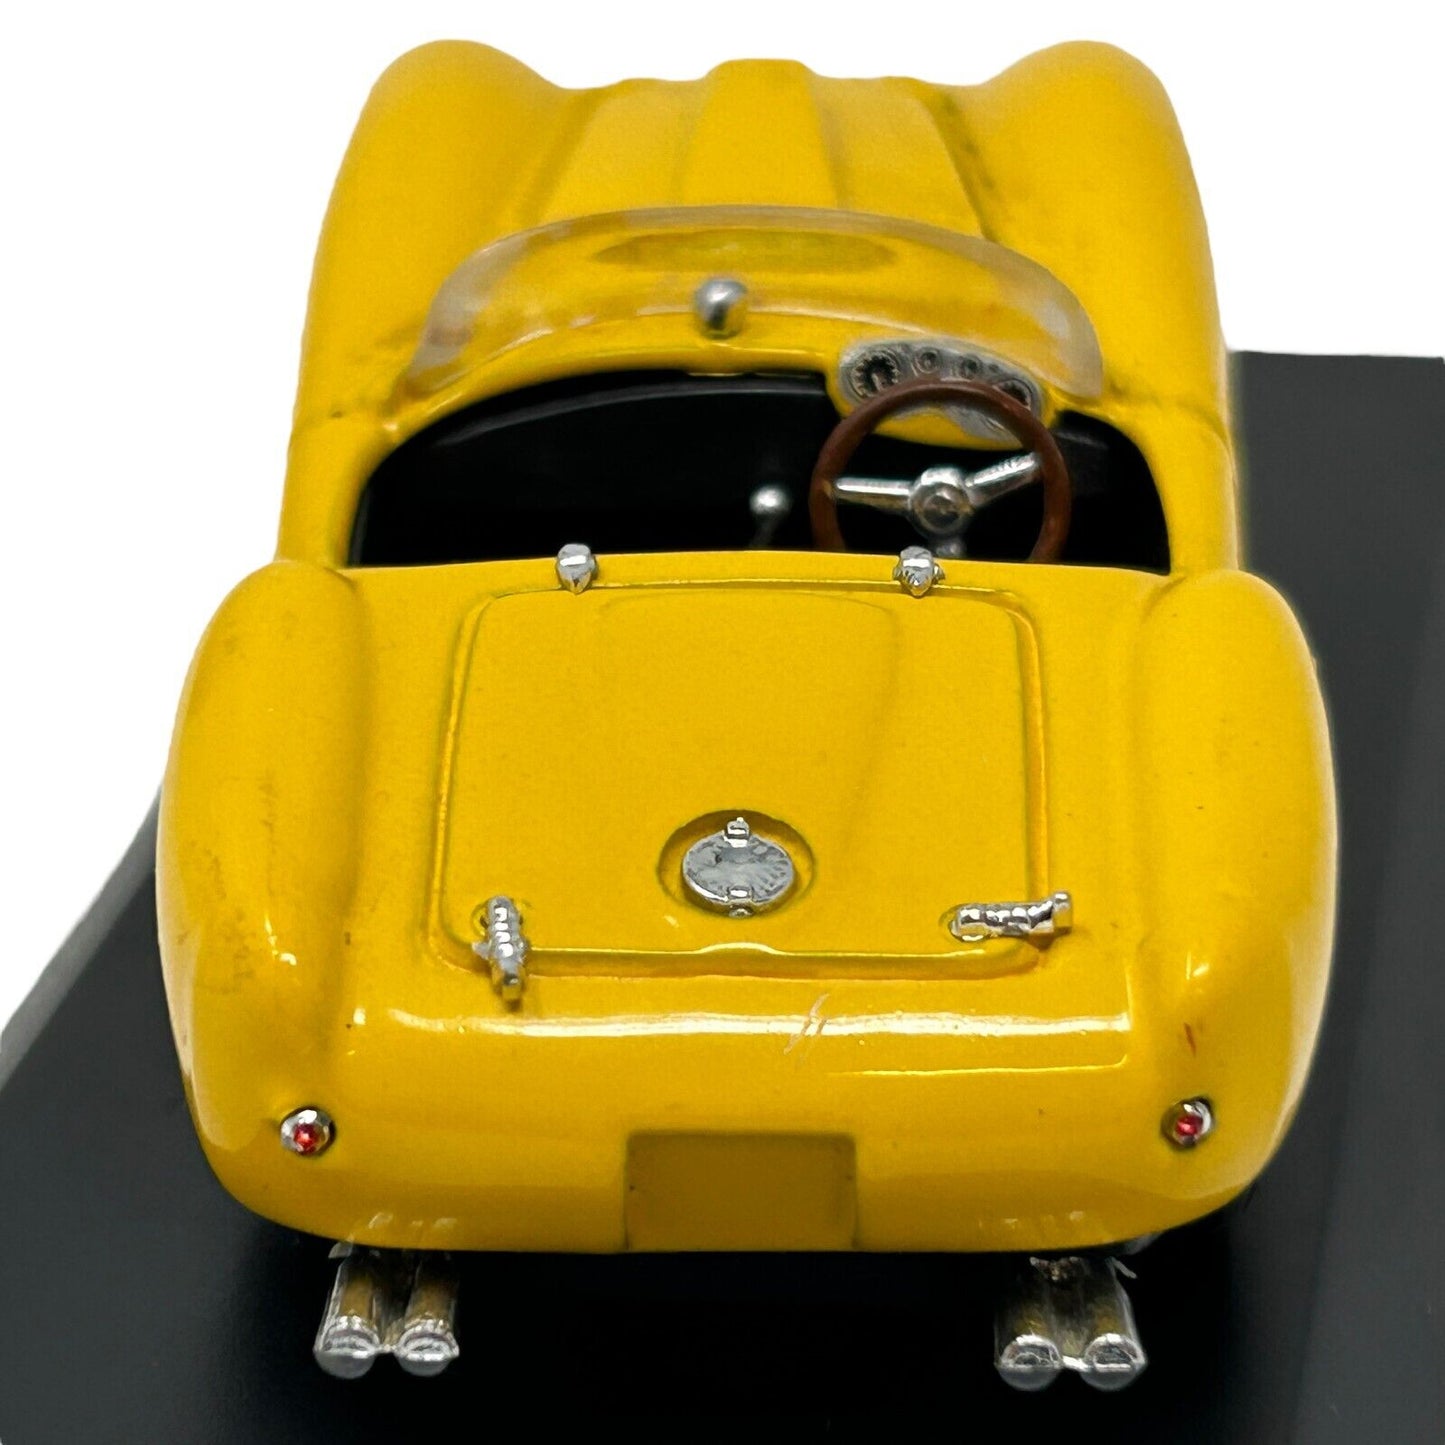 1954 Ferrari 375 Plus Le Mans Top Model Diecast Car Yellow Made In Italy 1/43